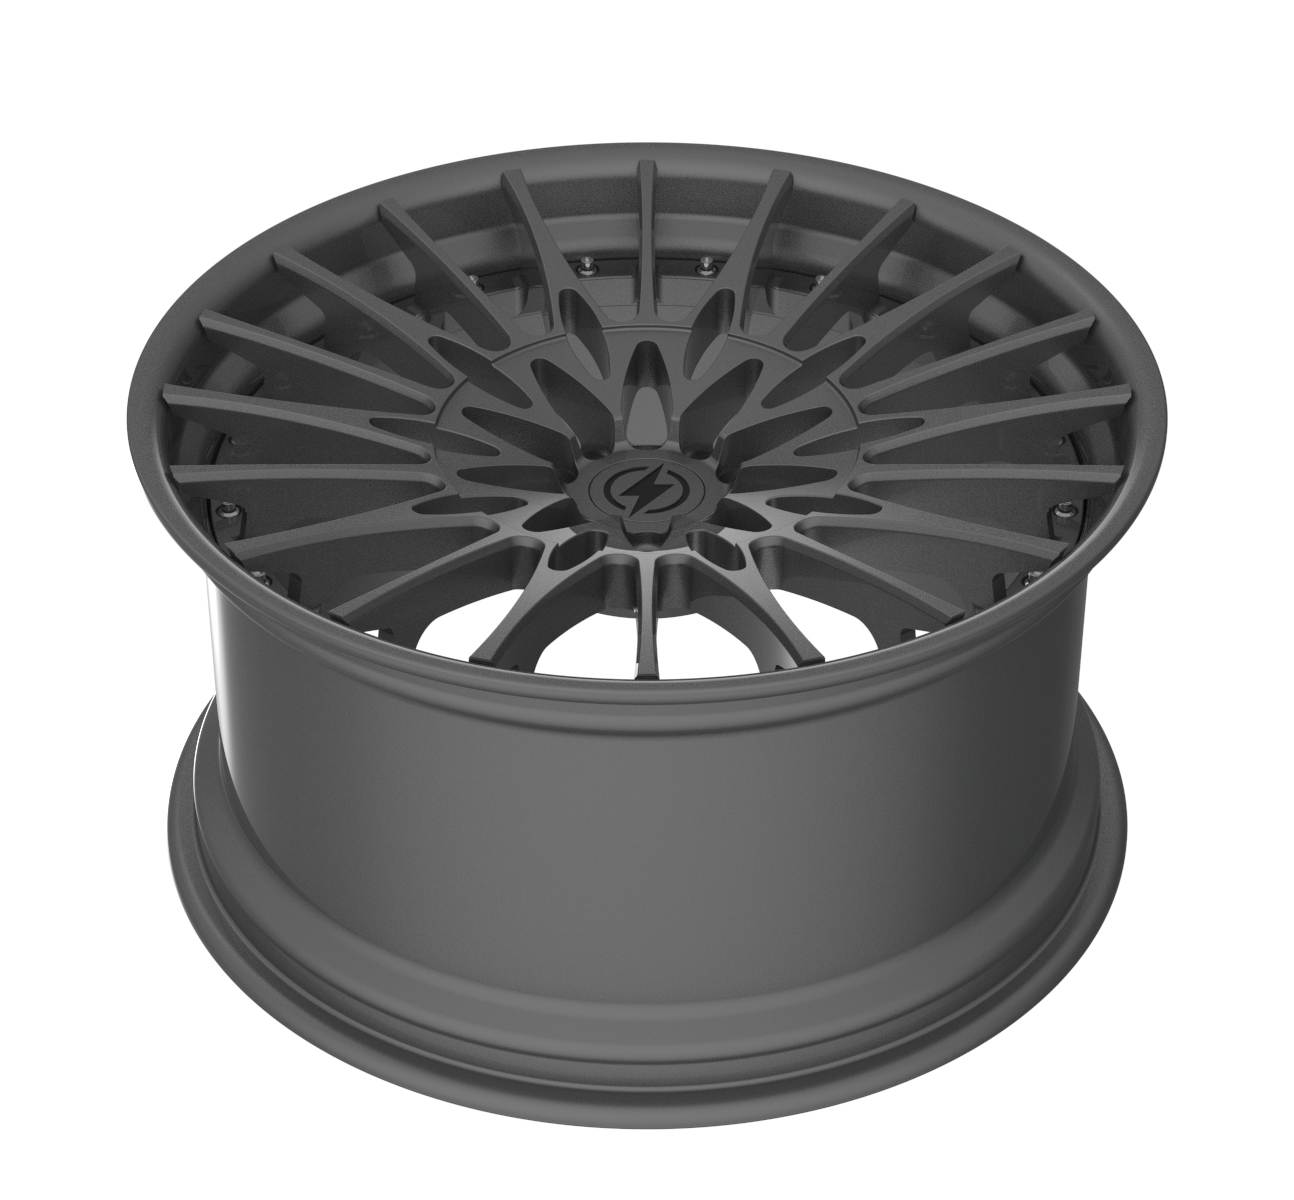 EF2P-17 Forged Wheel For Tesla